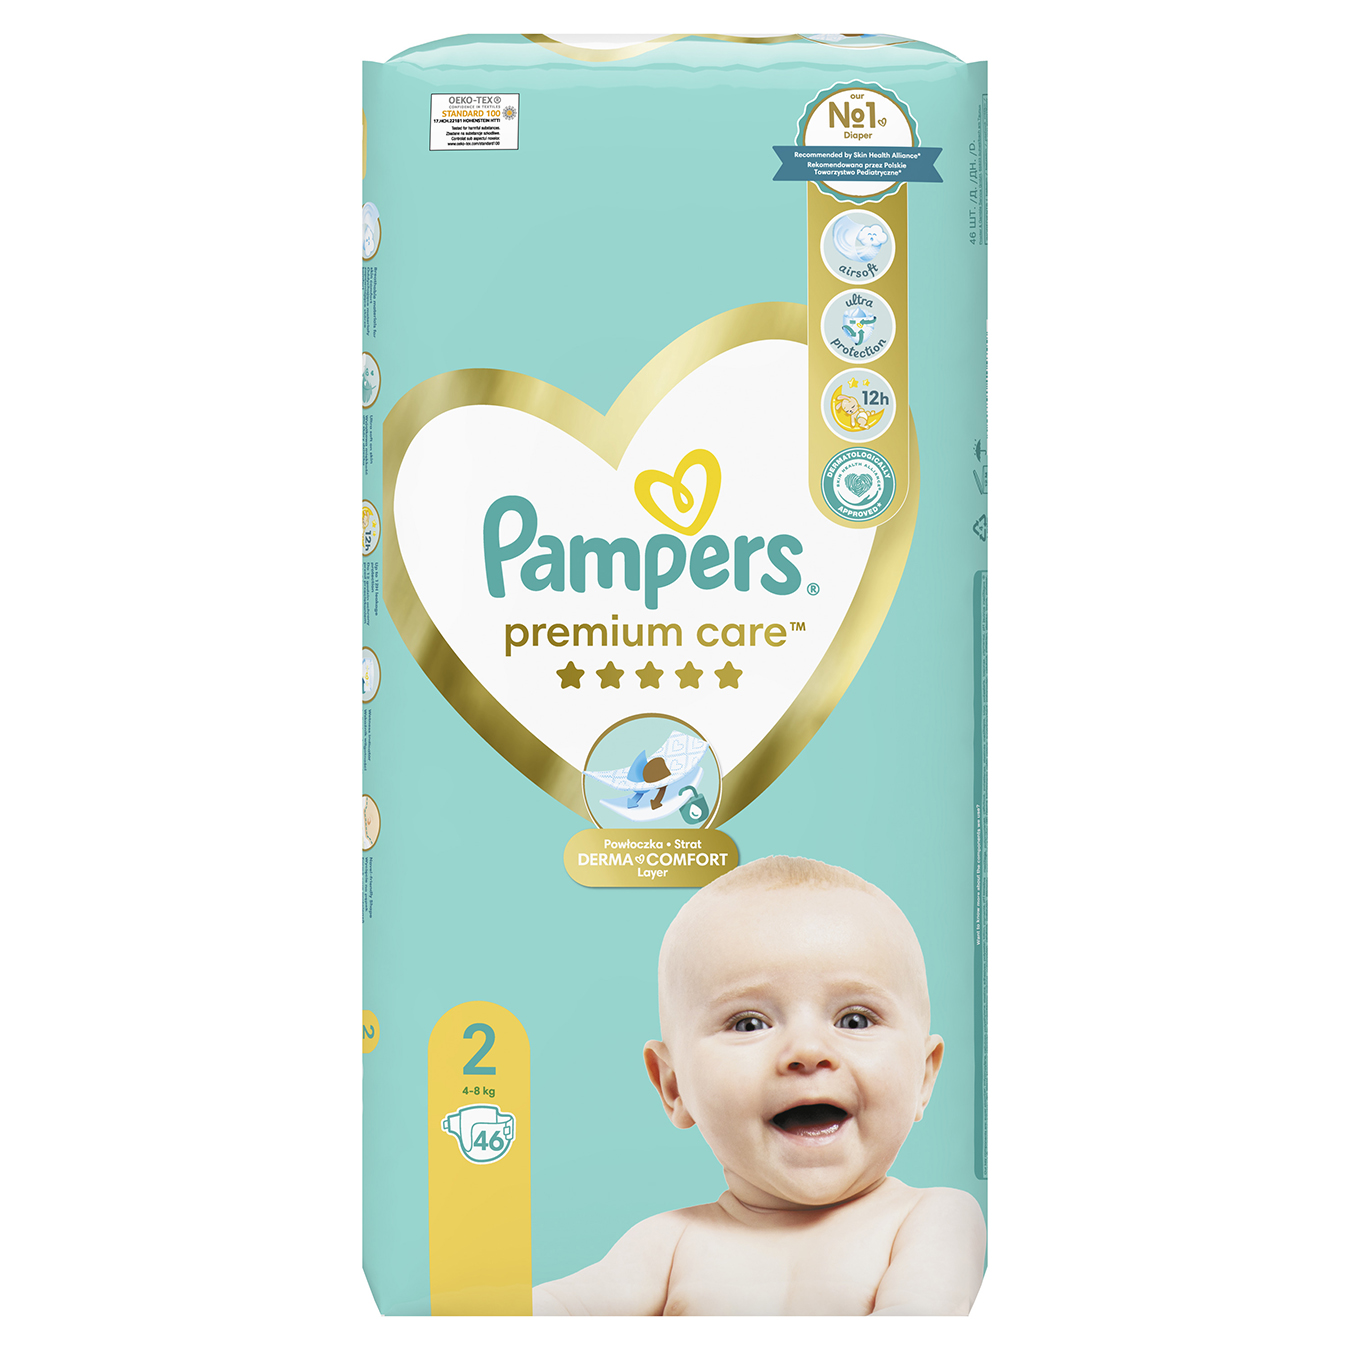 Pampers Premium Care Diapers 4-8 kg 46 pcs